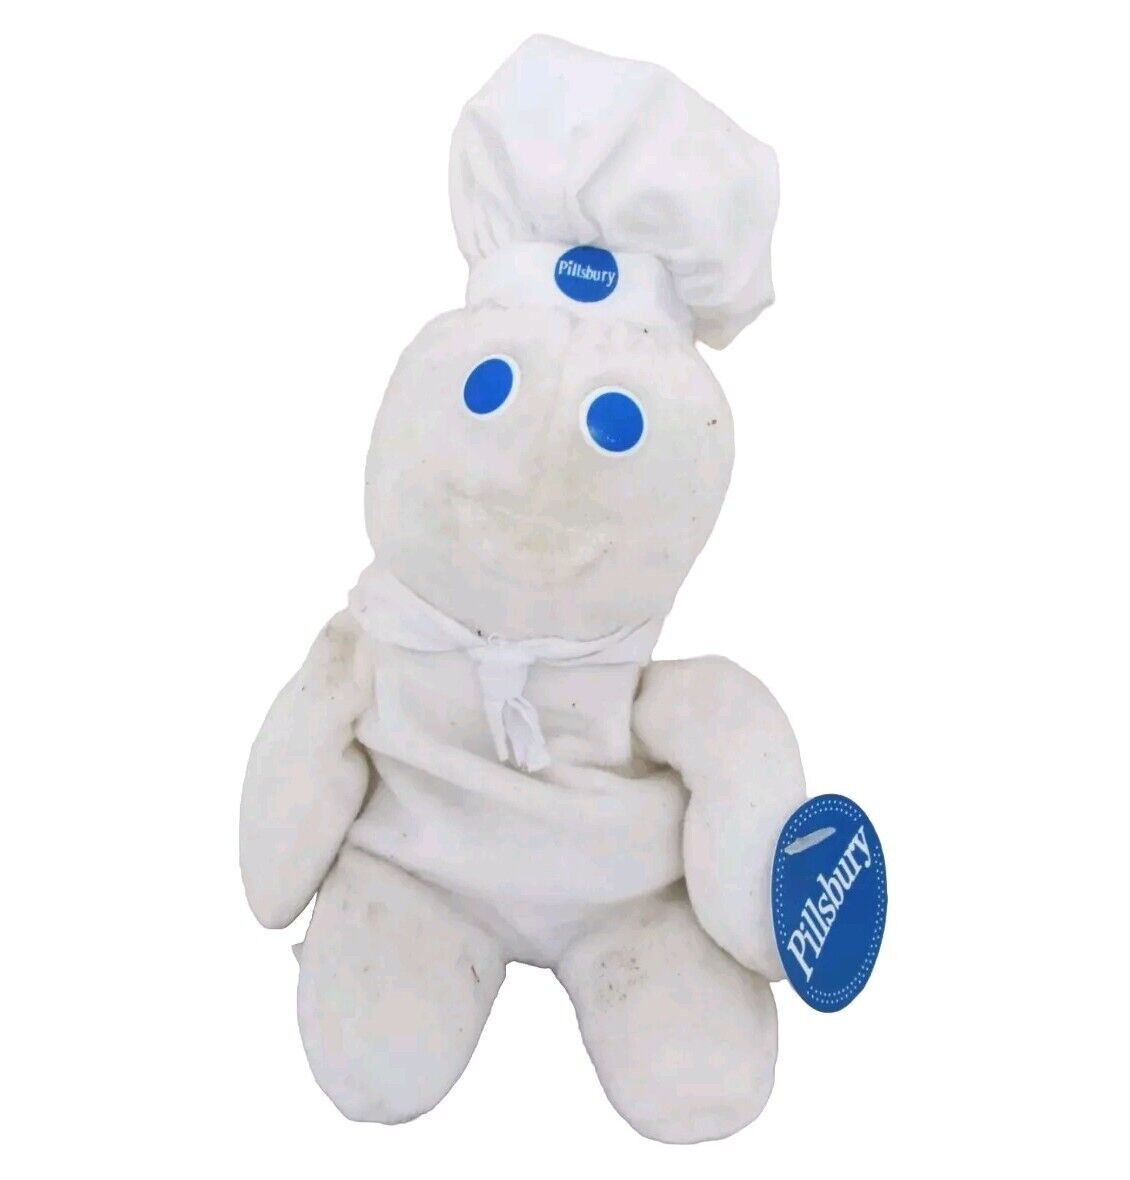 Vintage Pillsbury Doughboy Bean Bag Chef Hat Dough Boy Stuffed Doll Plush Figure